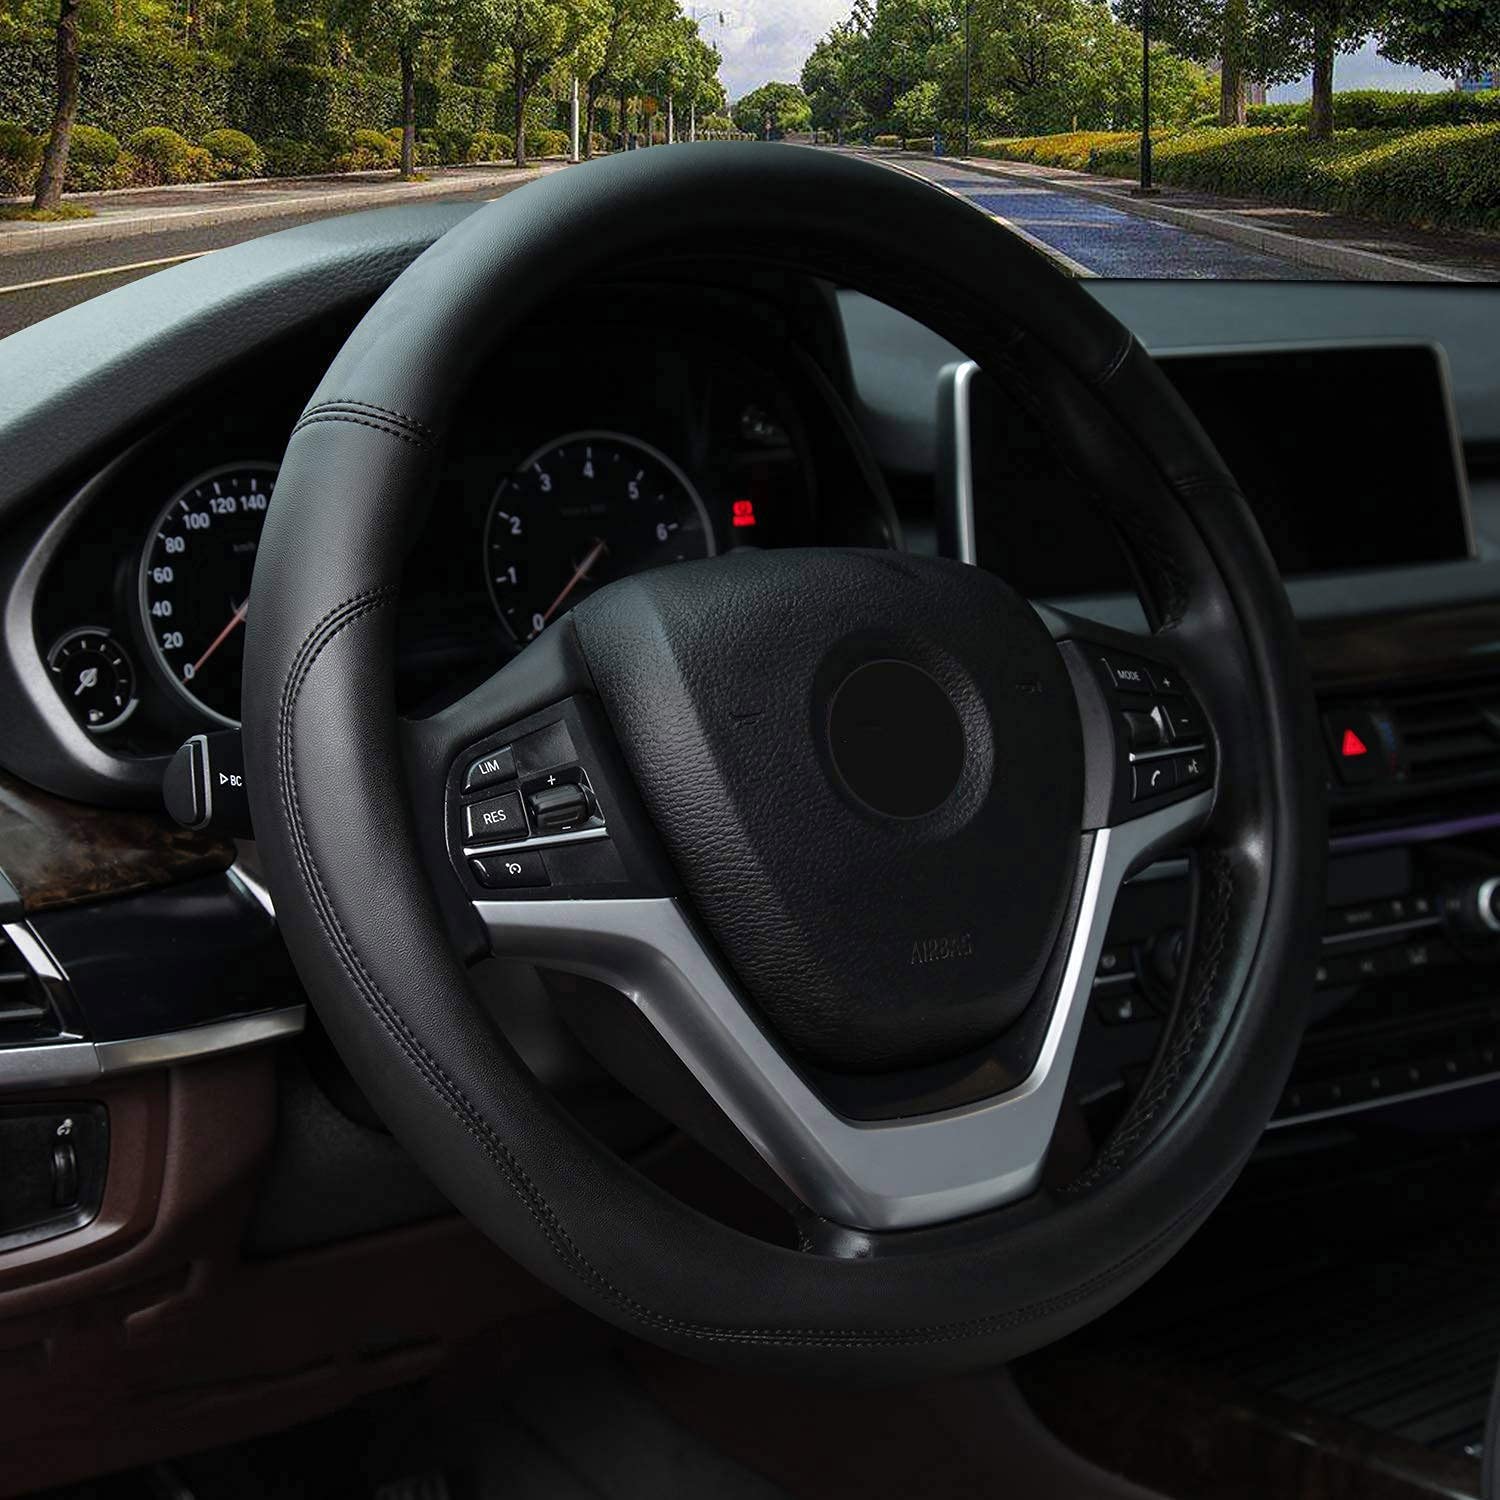  8. Valleycomfy Microfiber Leather Steering Wheel Covers 